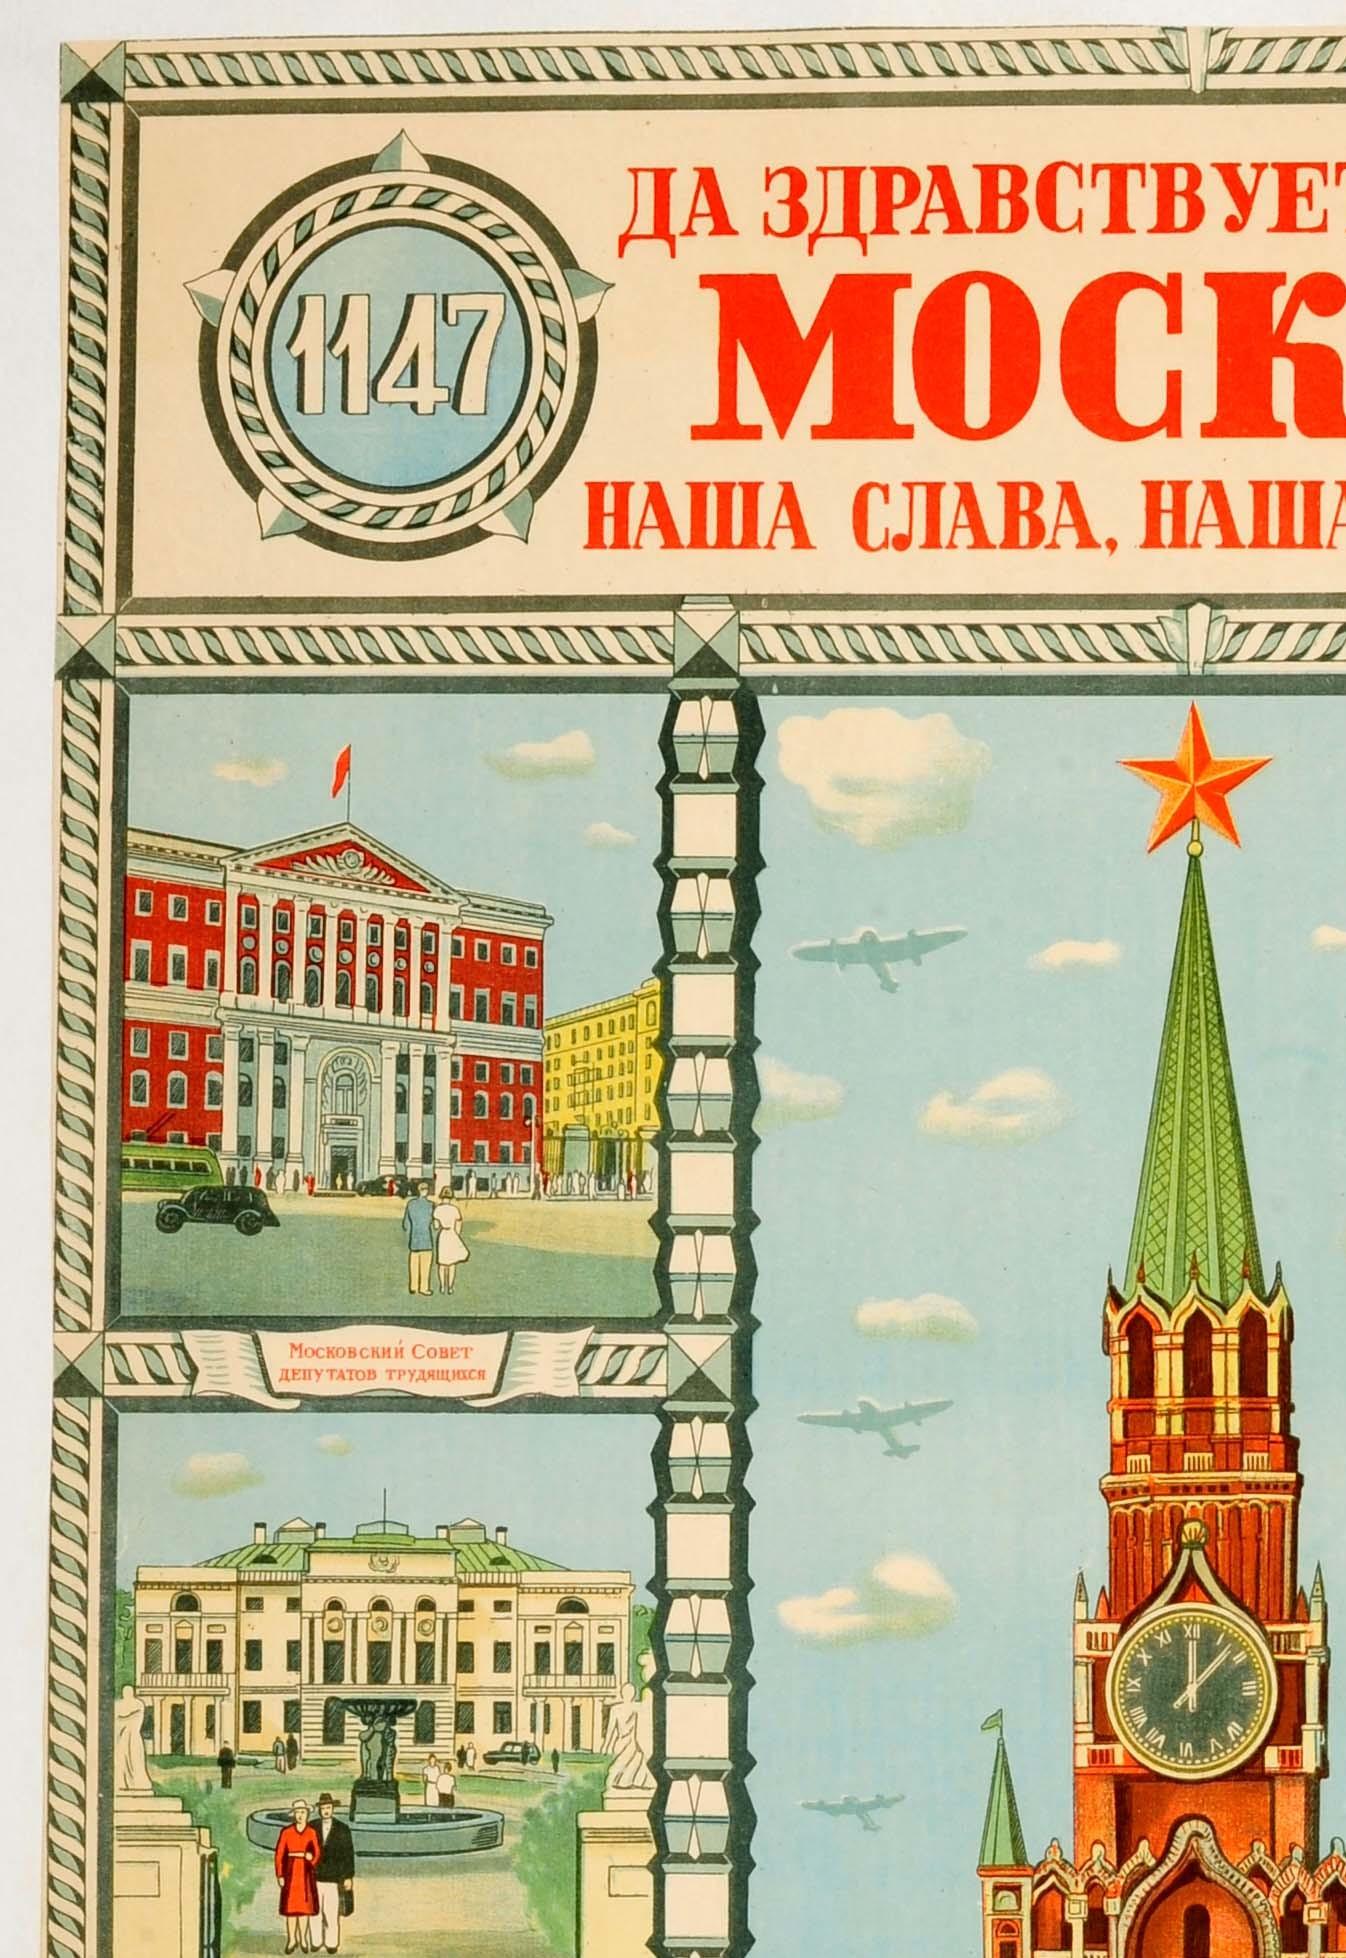 Original Vintage Soviet Poster Long Live Our Moscow Our Glory & Pride 1147-1947 - Print by V Livanova